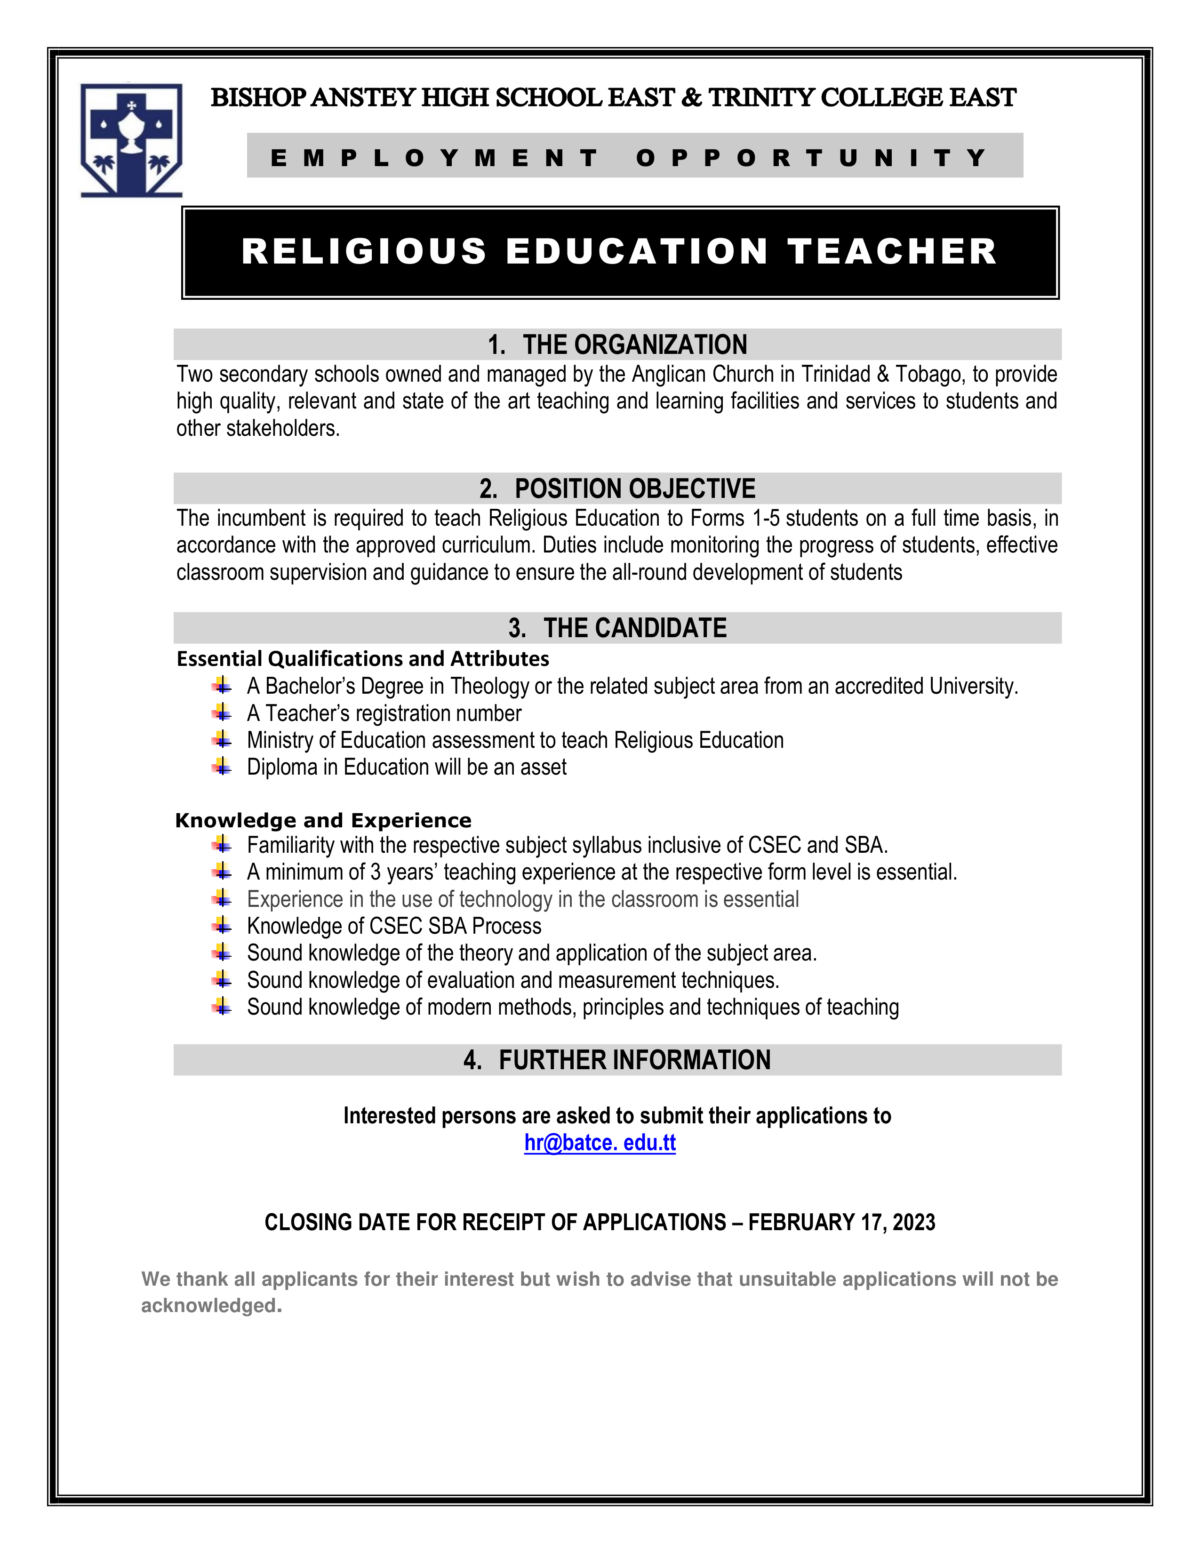 BATCE Vacancy – Religious Education Teacher